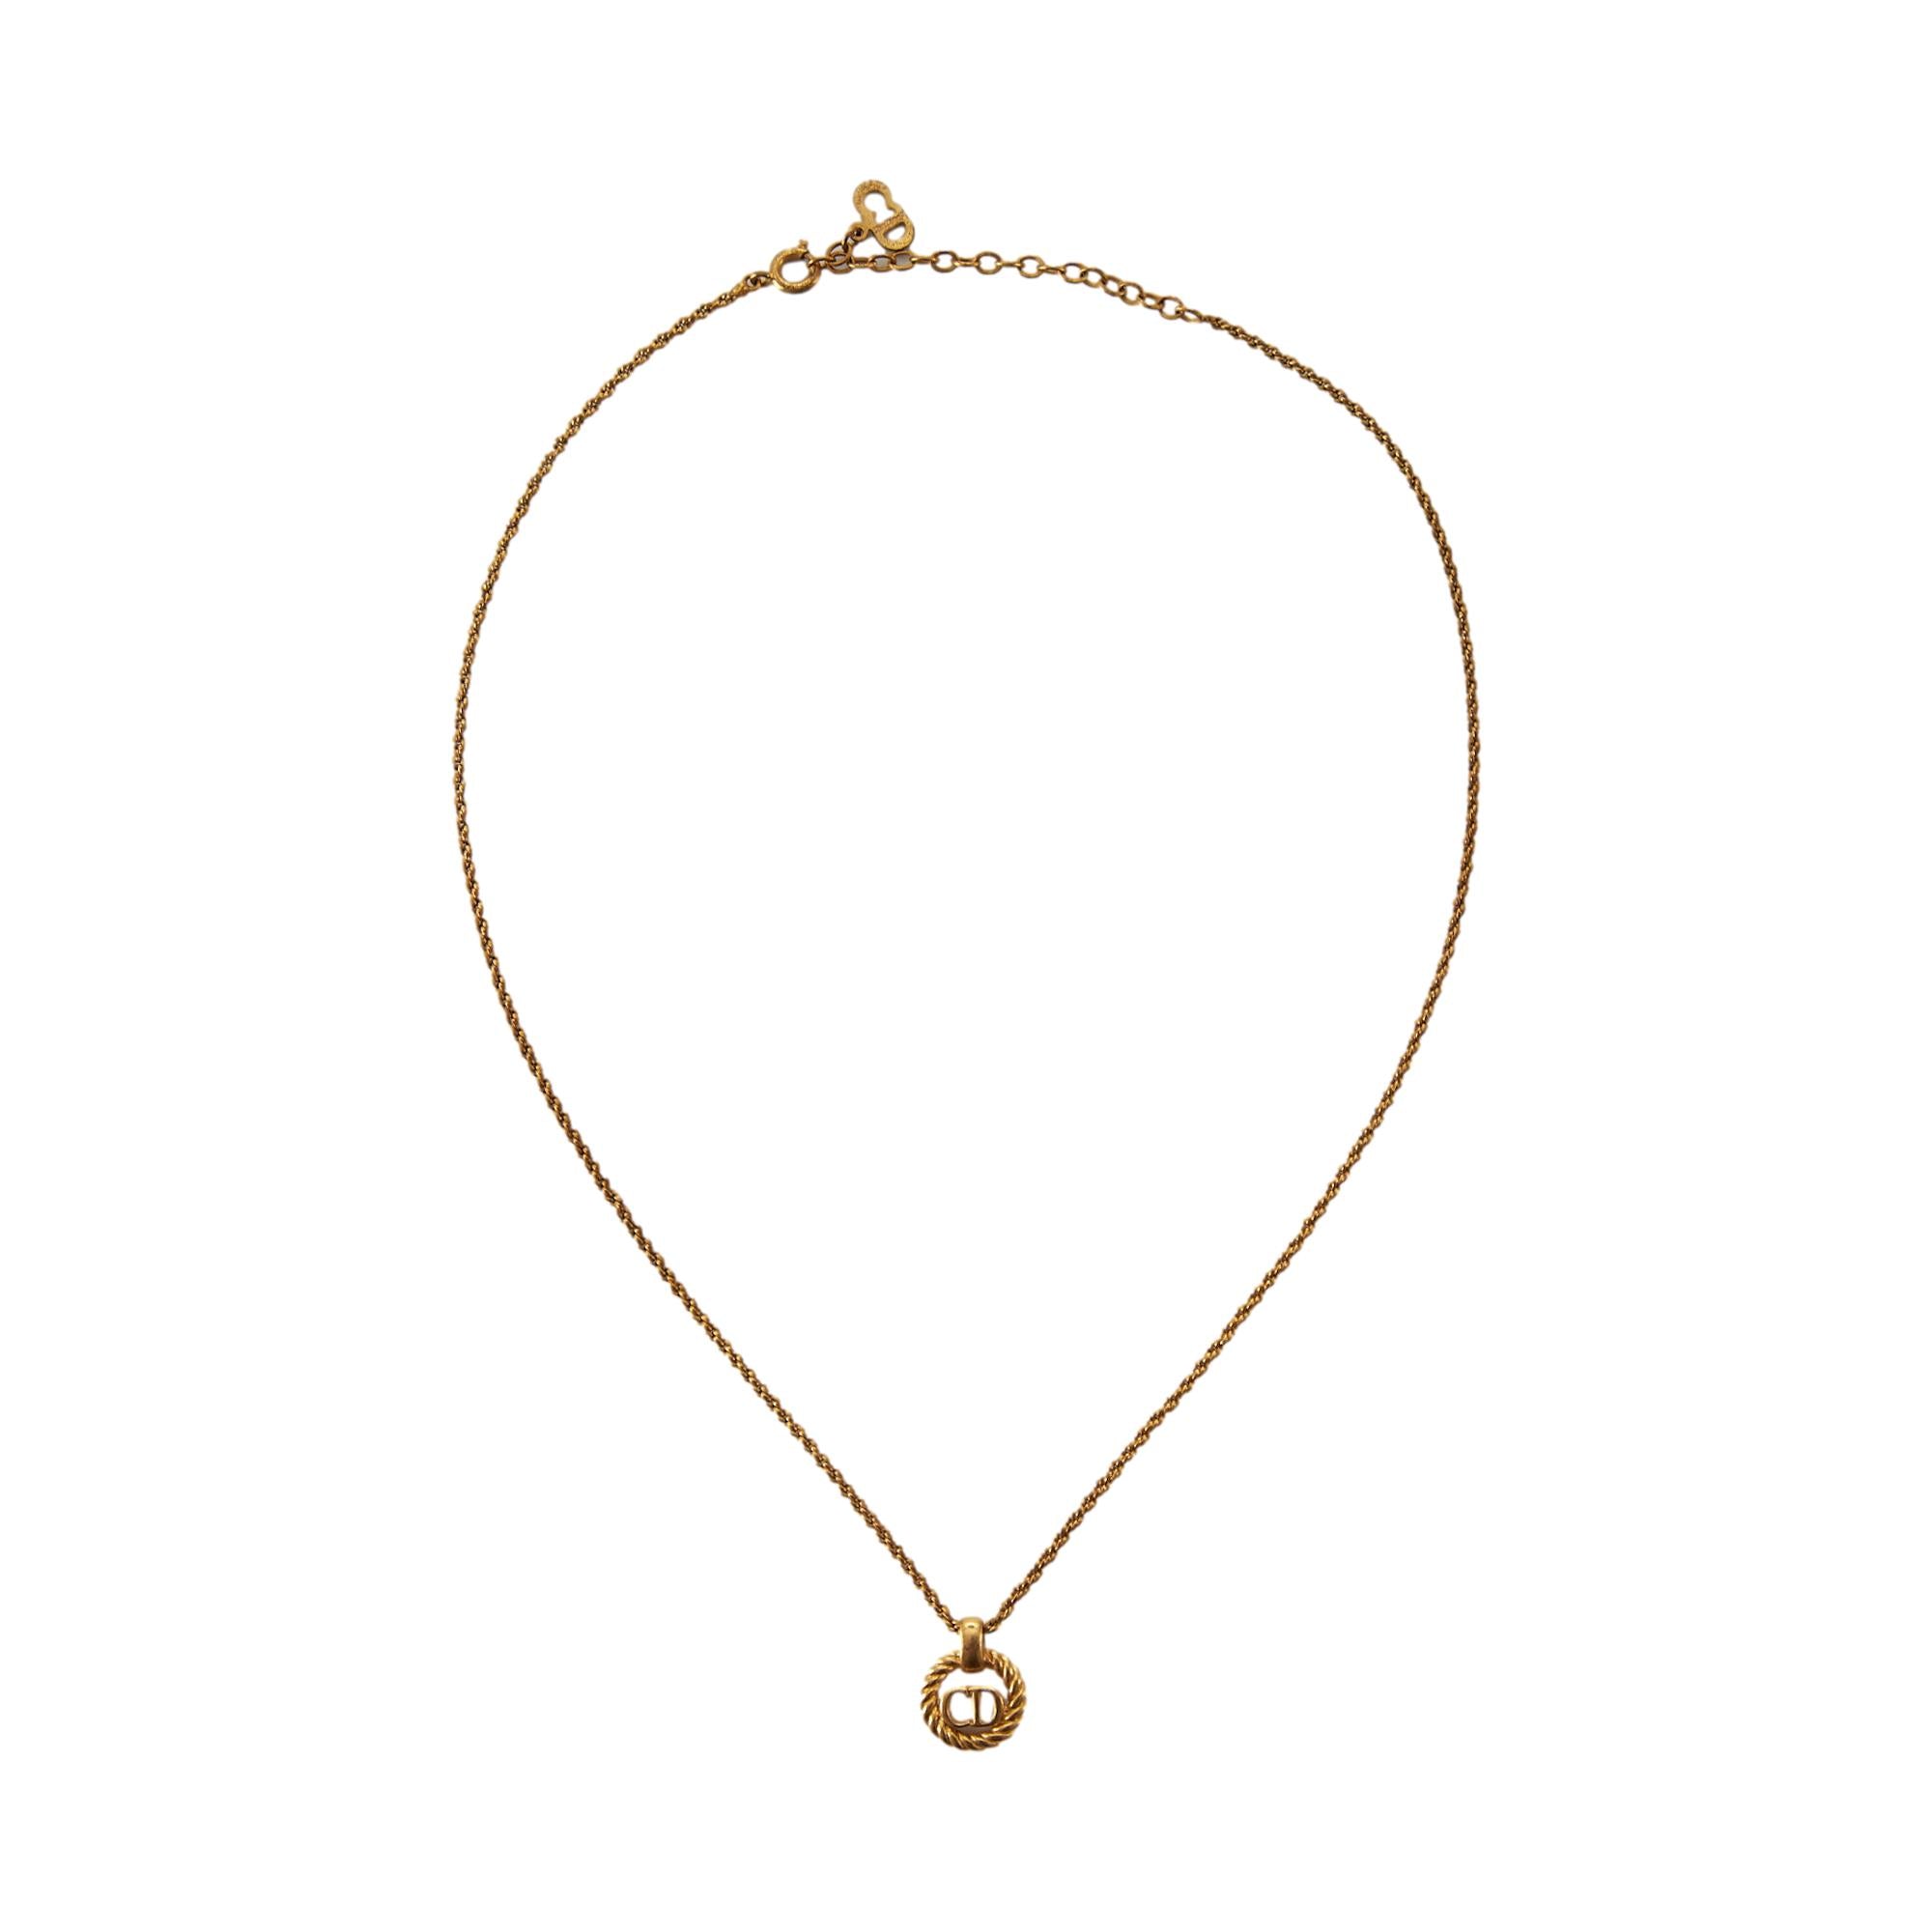 Dior Gold Circle 'CD' Necklace